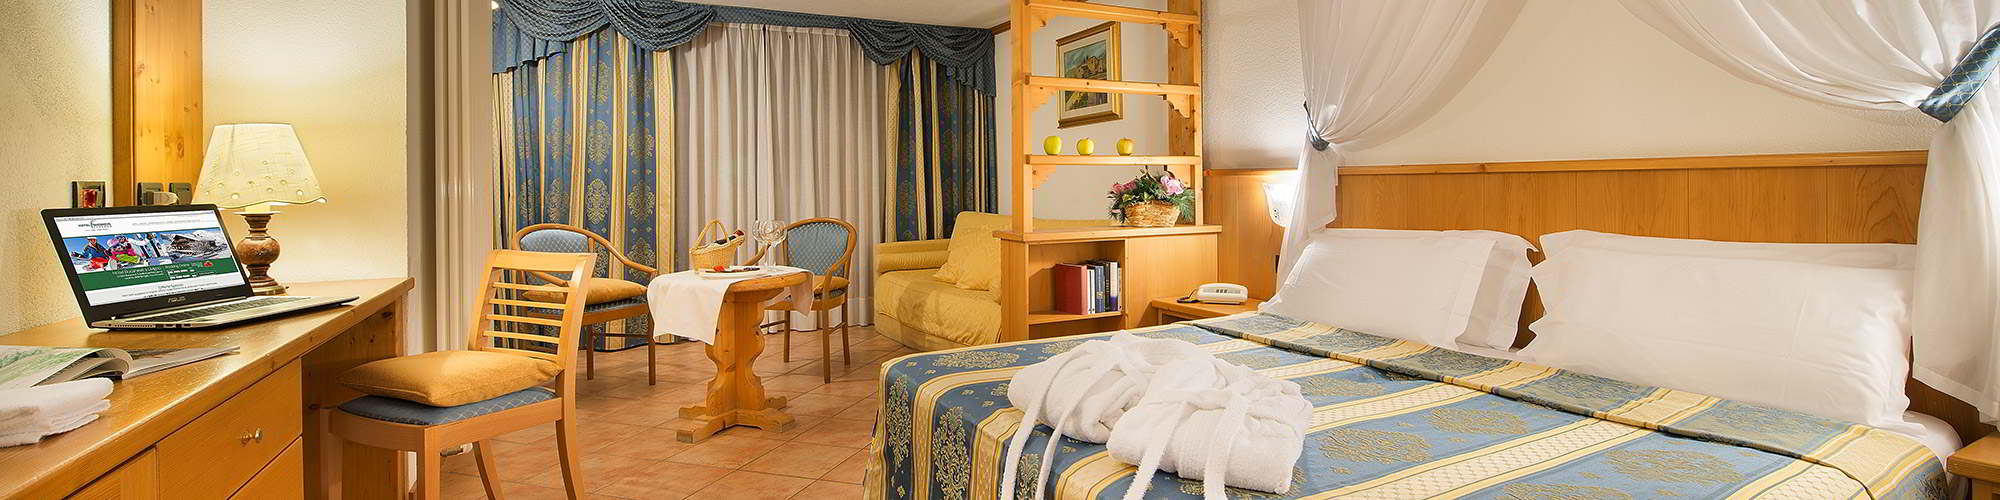 Hotel Bucaneve - Via SS 301 N.194, Livigno 23041 - Room - Junior suite 3